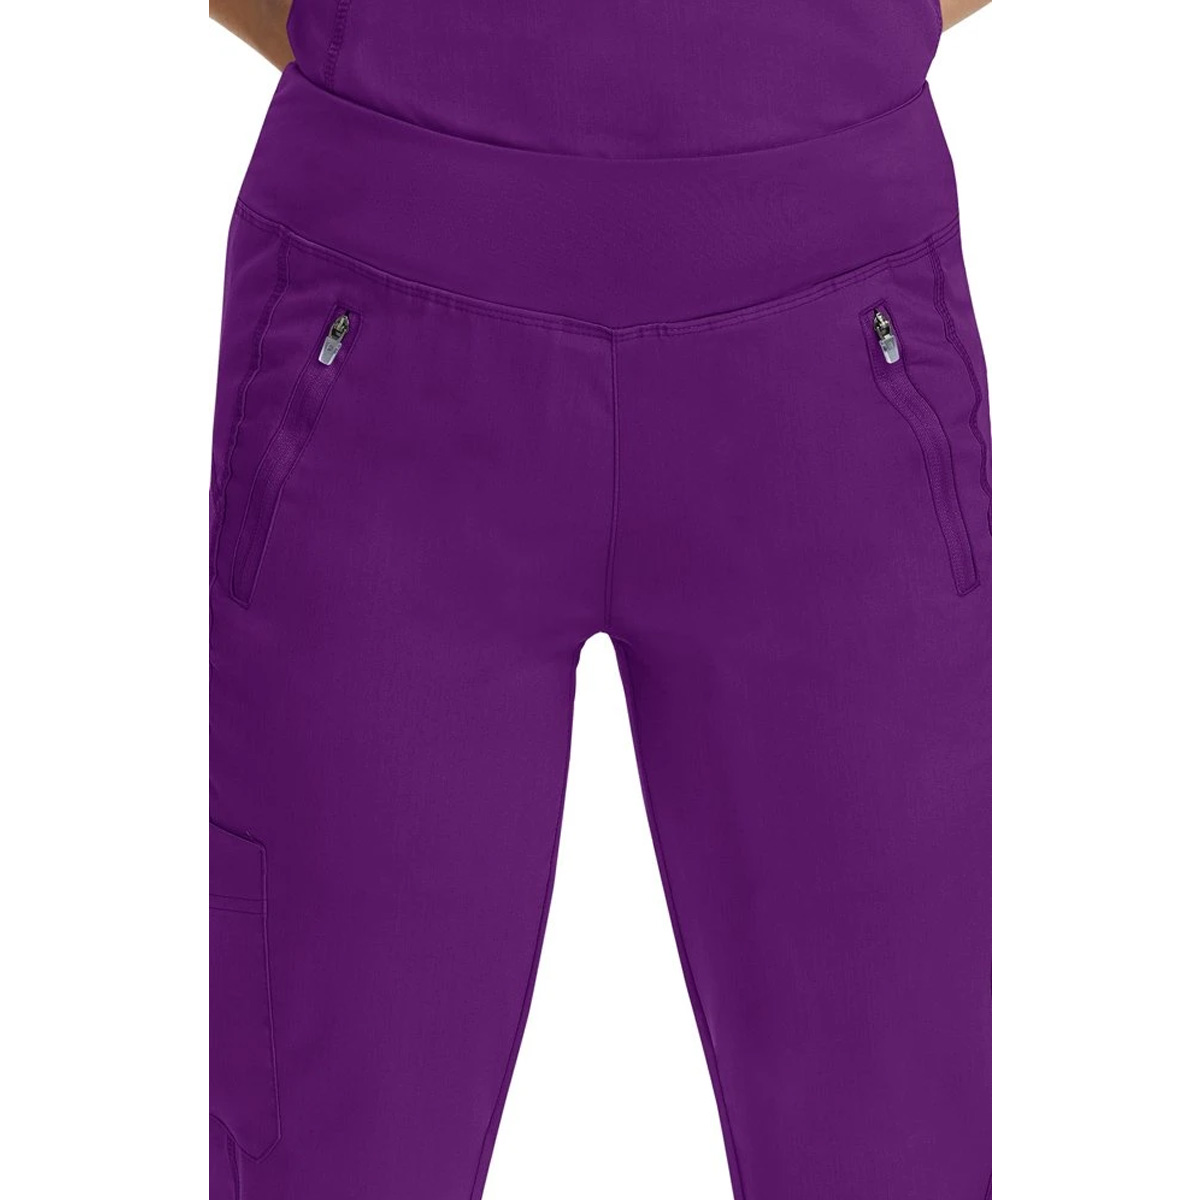 Healing Hands Purple Label Women's Tara Jogger Yoga Pant - 9233 - 2 Hearts  Medical